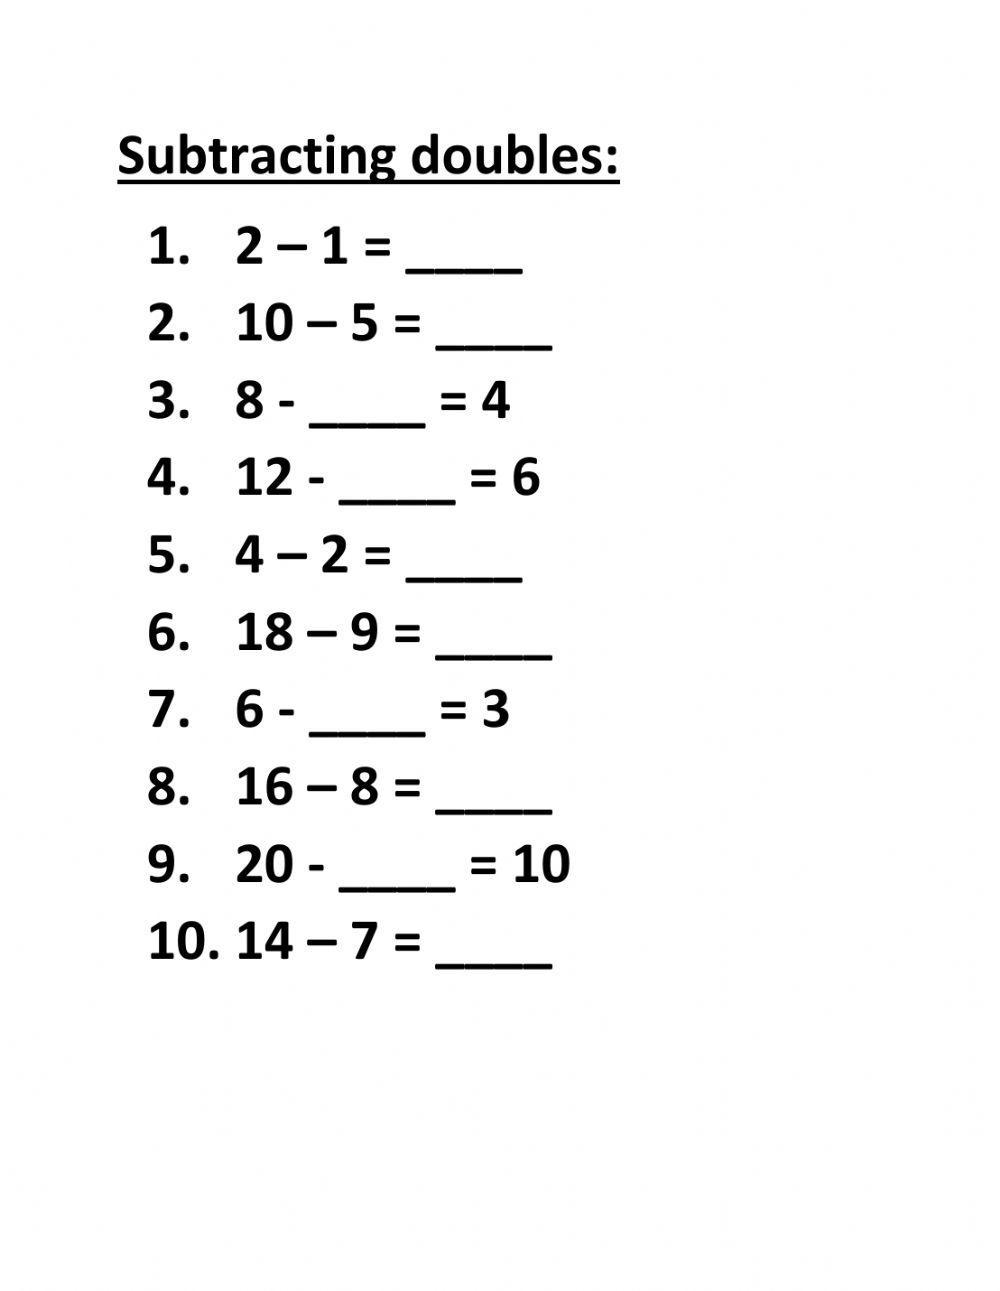 Subtracting doubles